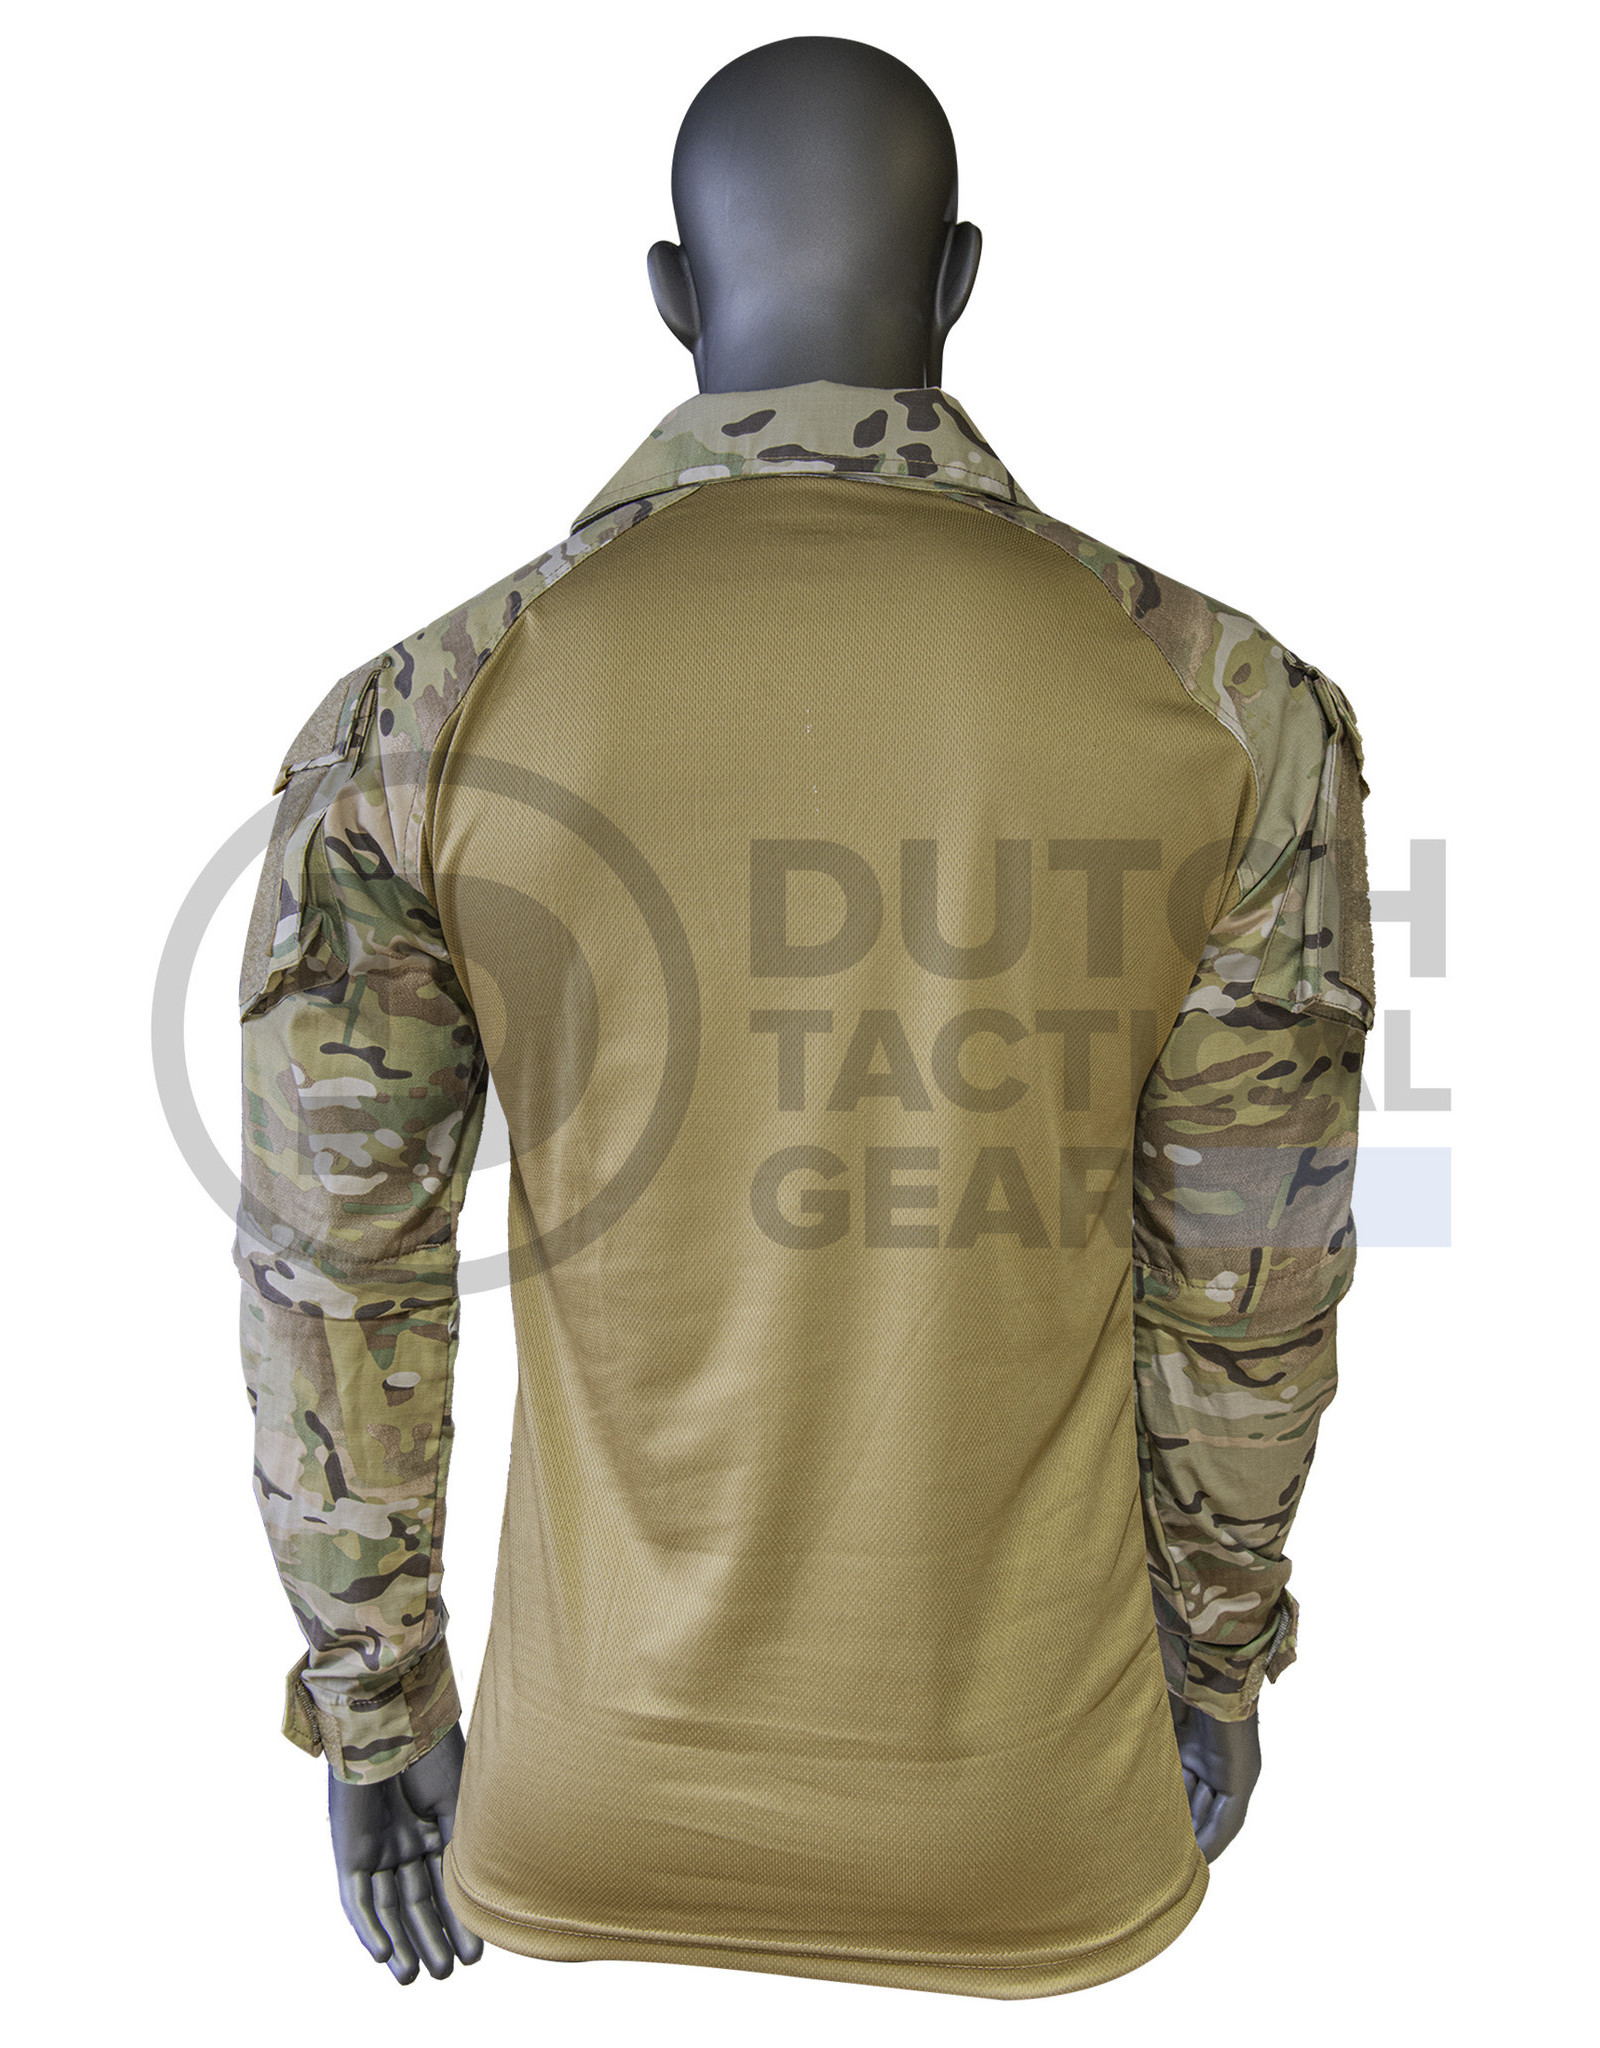 Dutch Tactical Gear Combat Shirt version 2 -All Terrain /Multicam